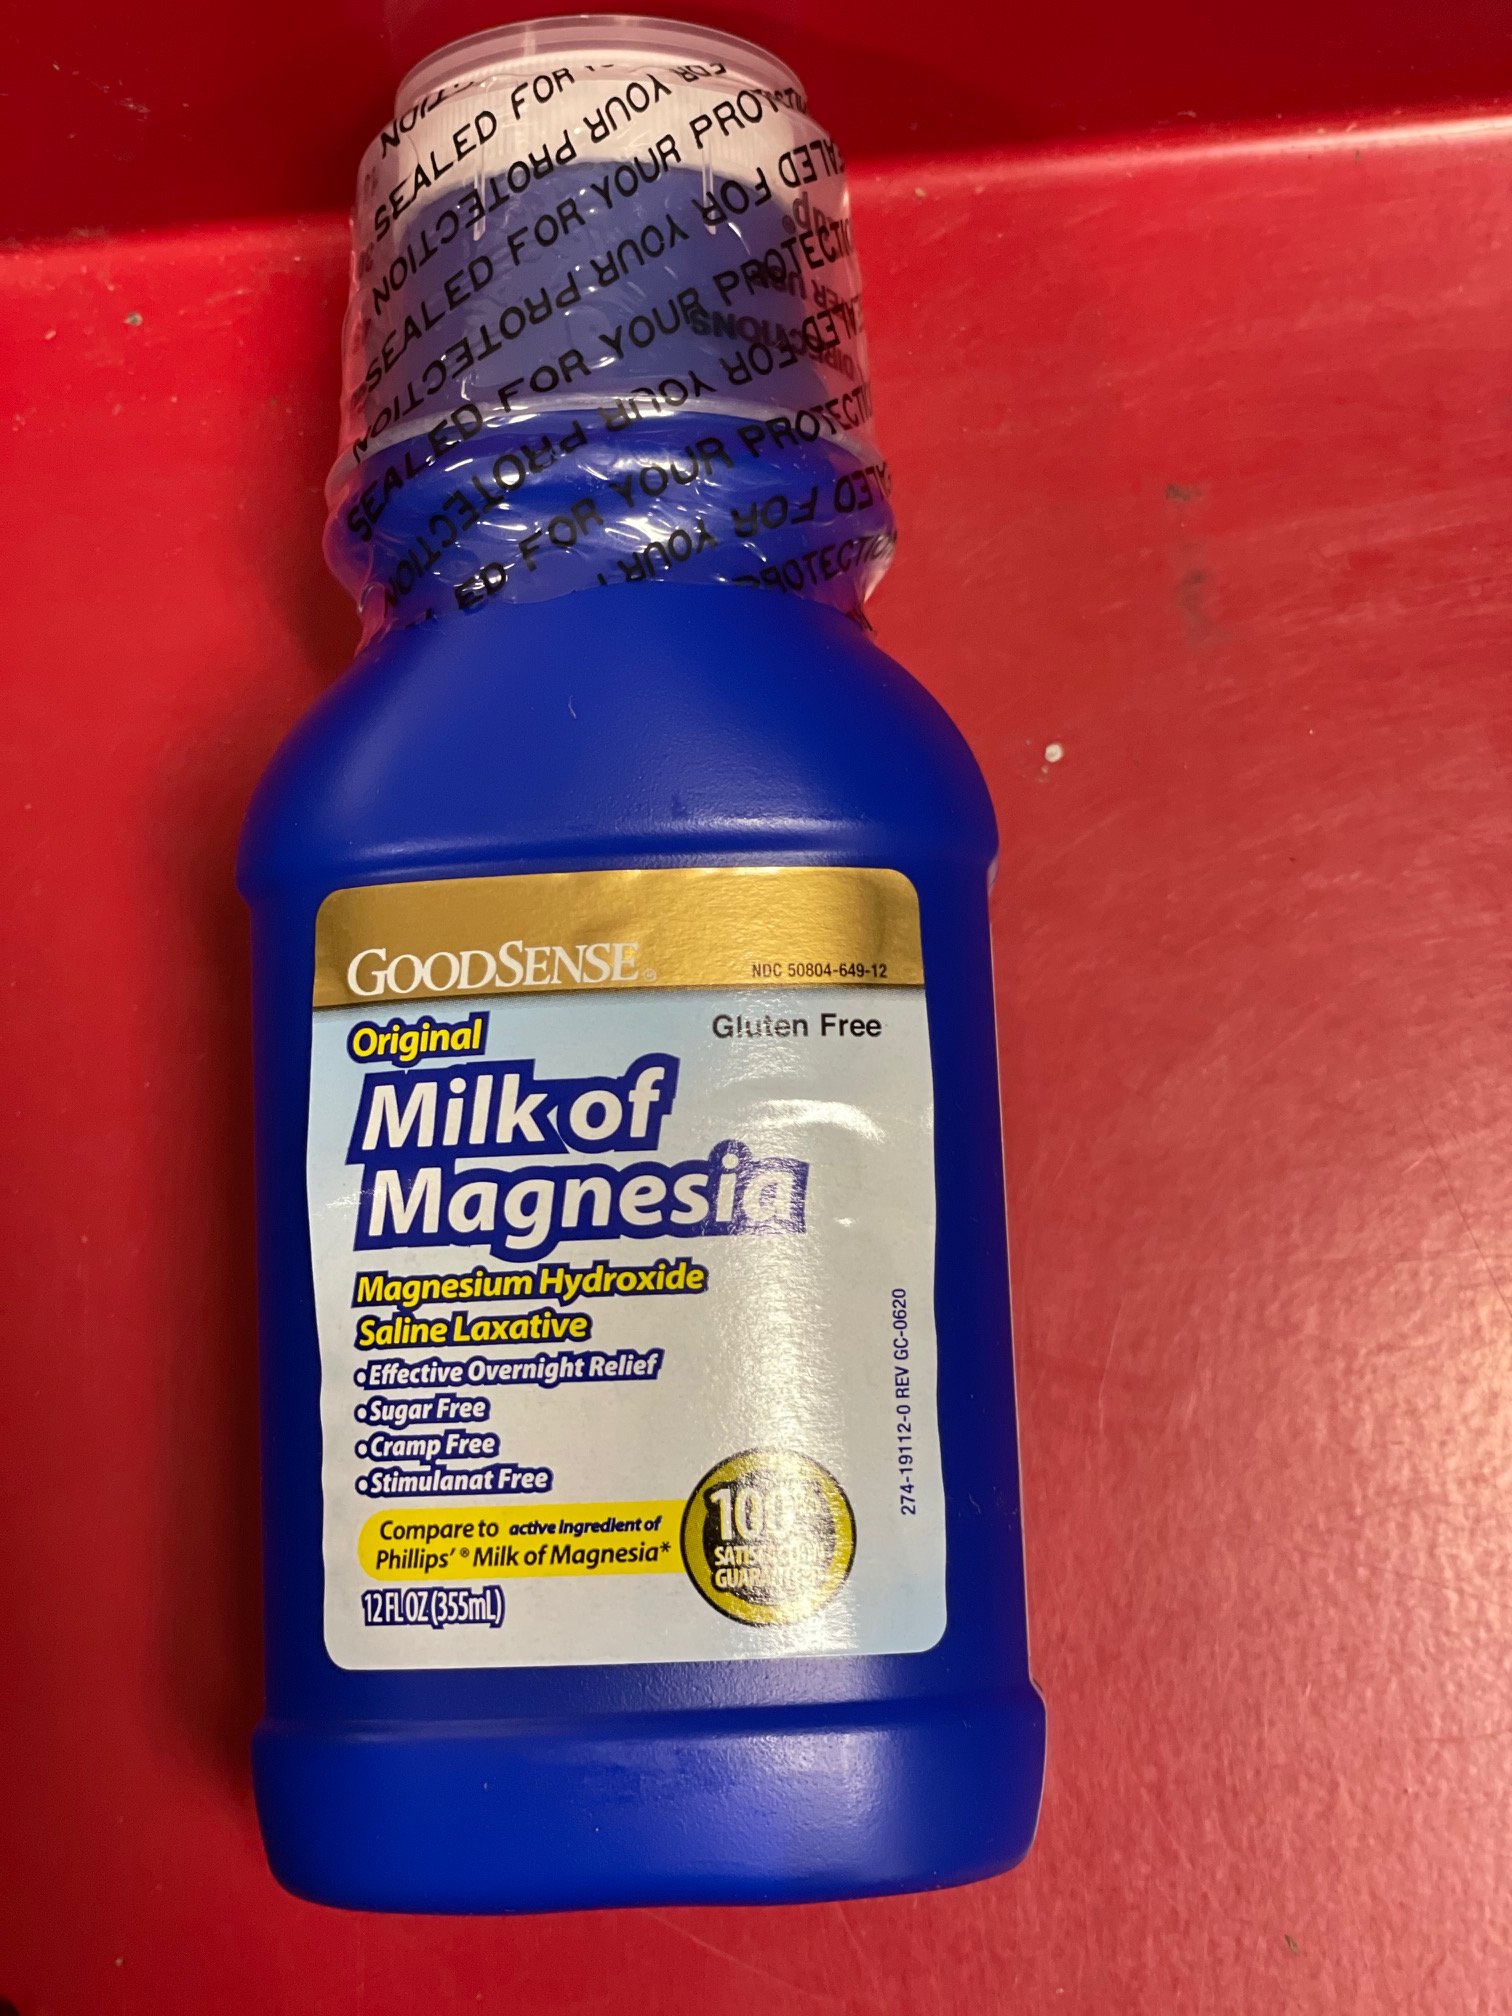 Milk of Magnesia: Le lait de magnésie - Perfect SKINcare